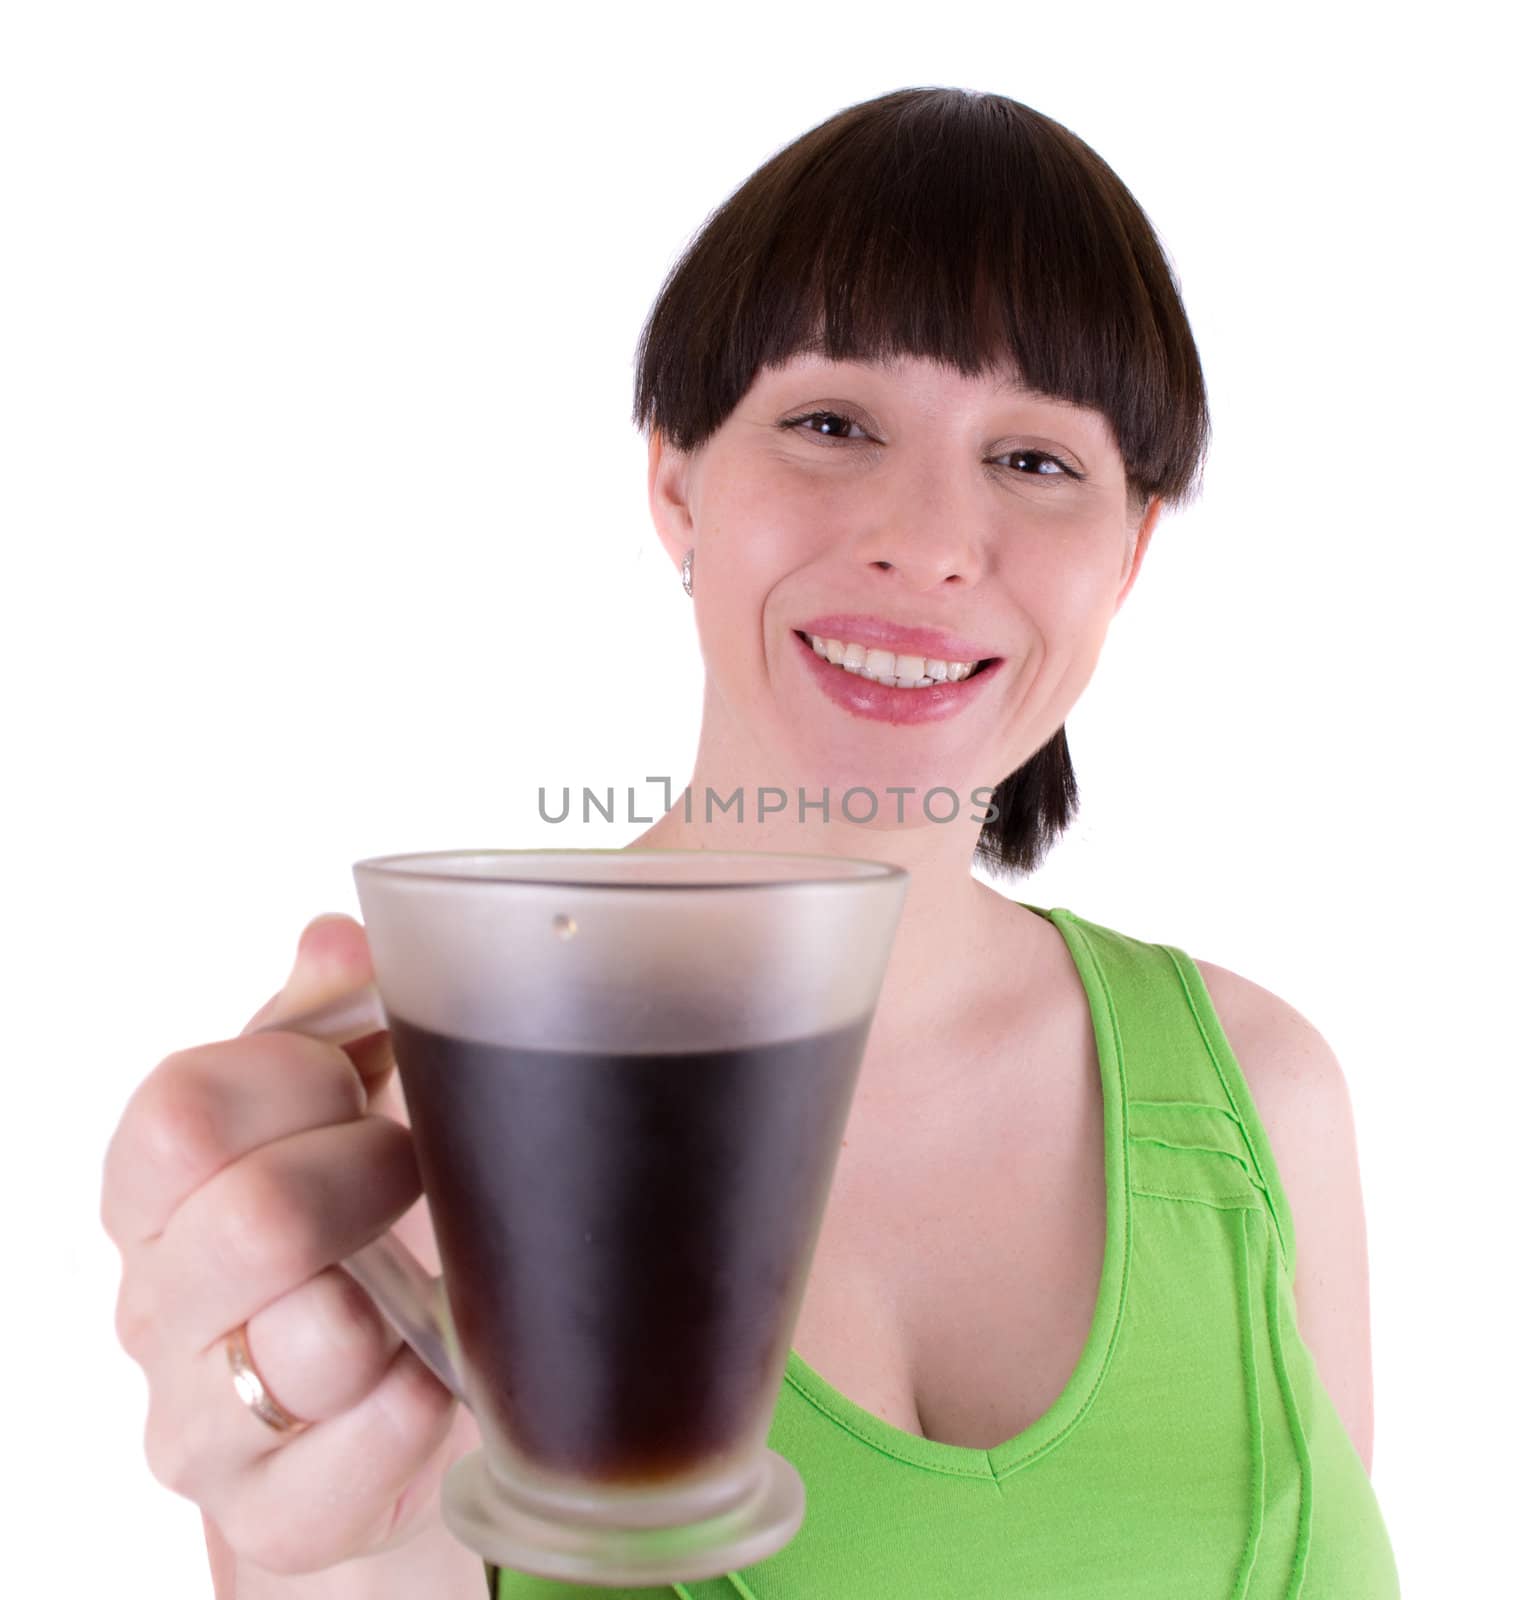 The young joyful woman drinks coffee